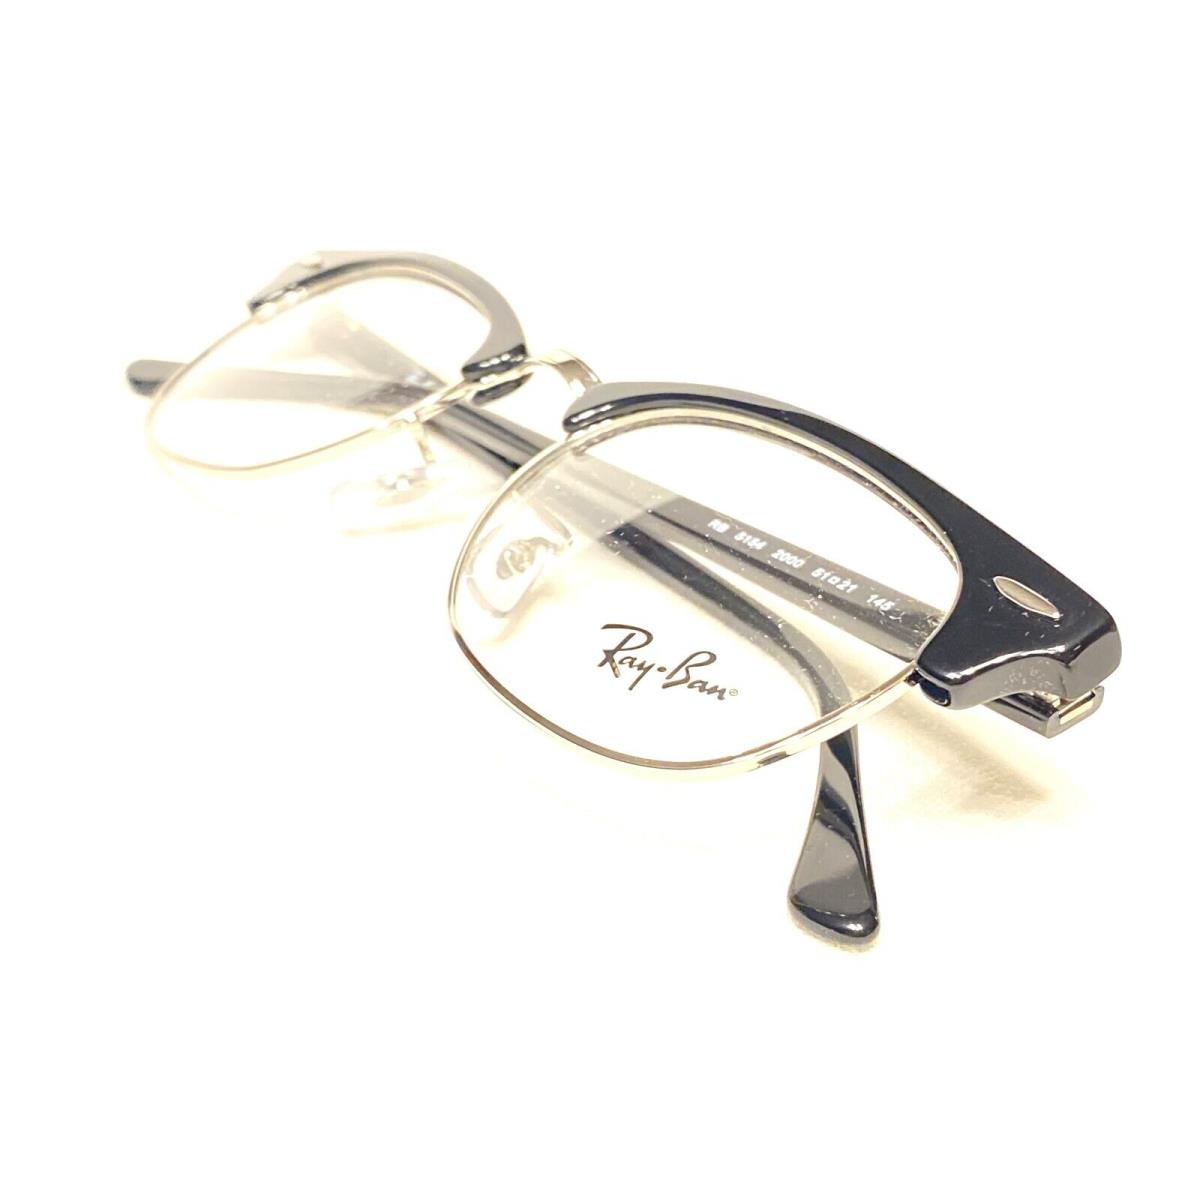 Ray Ban RB5154 2000 Clubmaster Black Silver Eyeglasses Frames 51/21 145 - Black Gloss, Frame: Black & Silver, Manufacturer: 2000